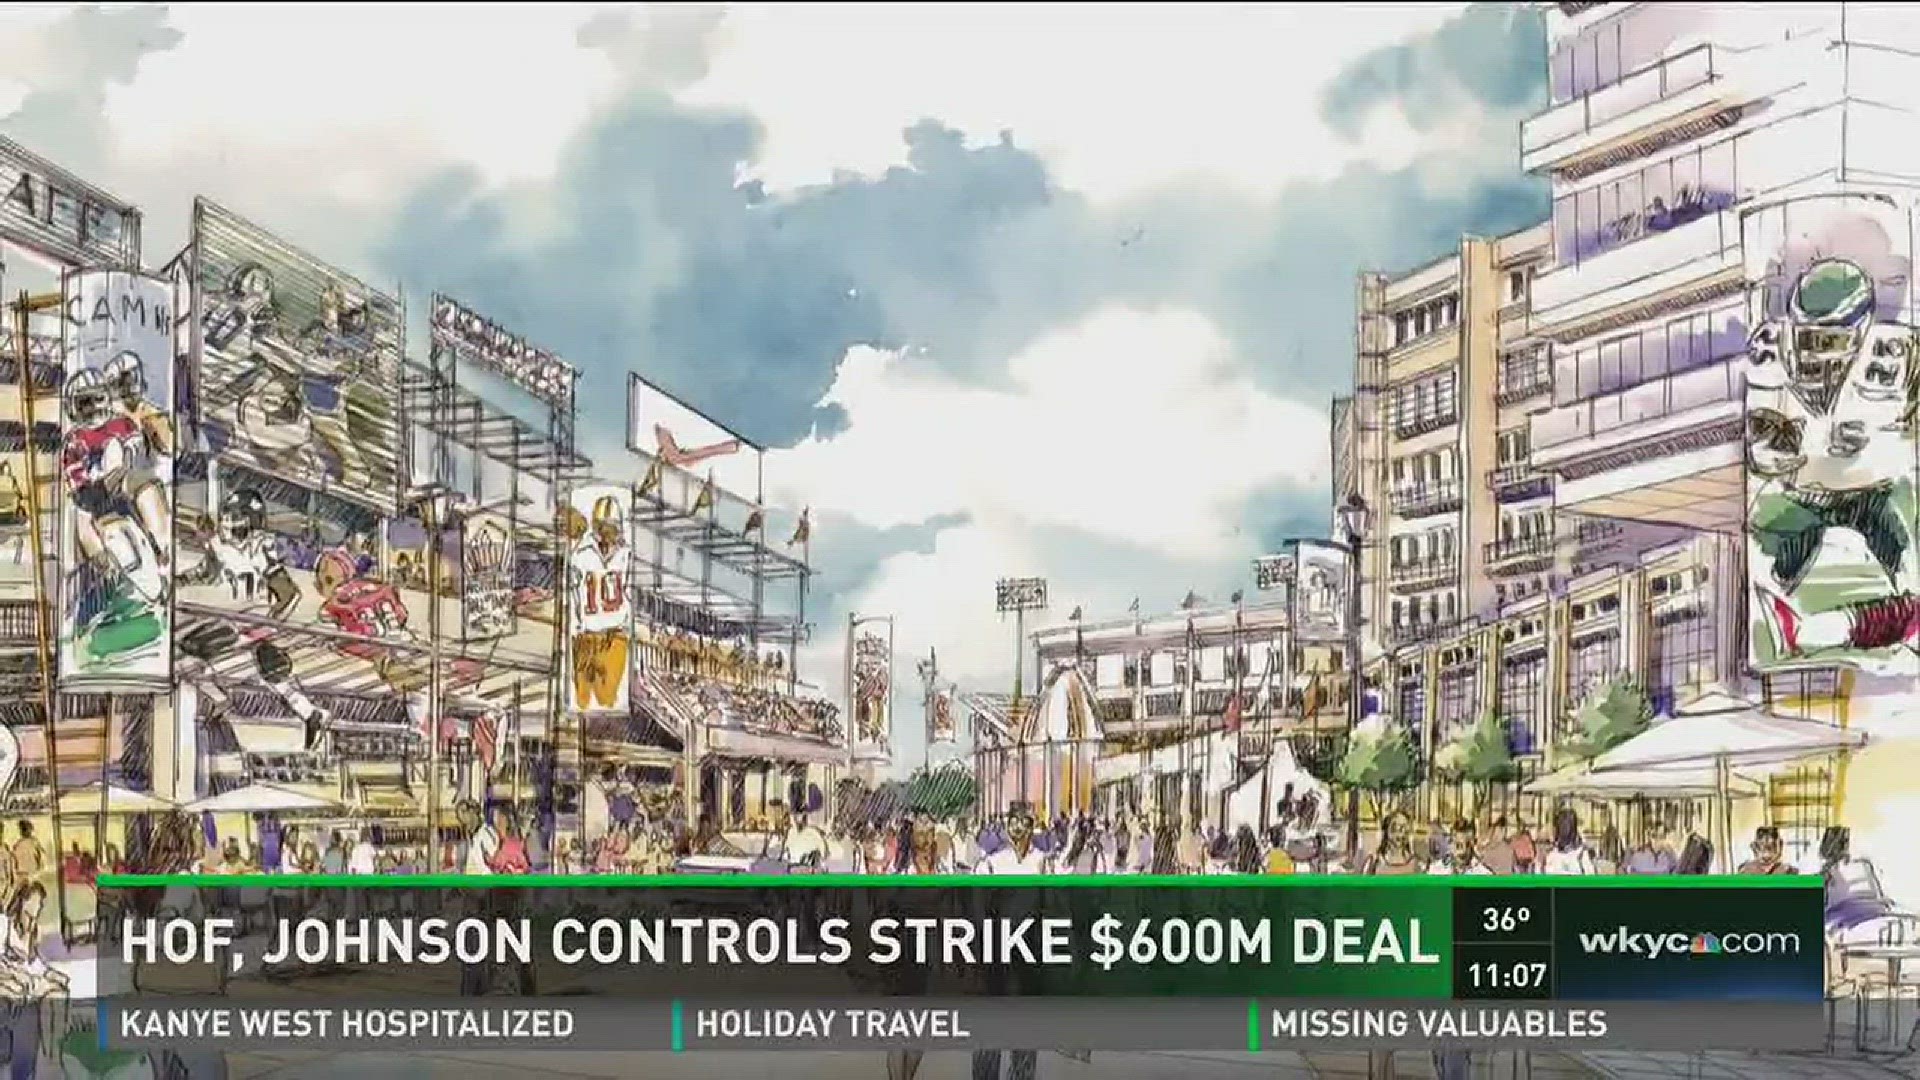 HOF, Johnson controls strike $600M deal